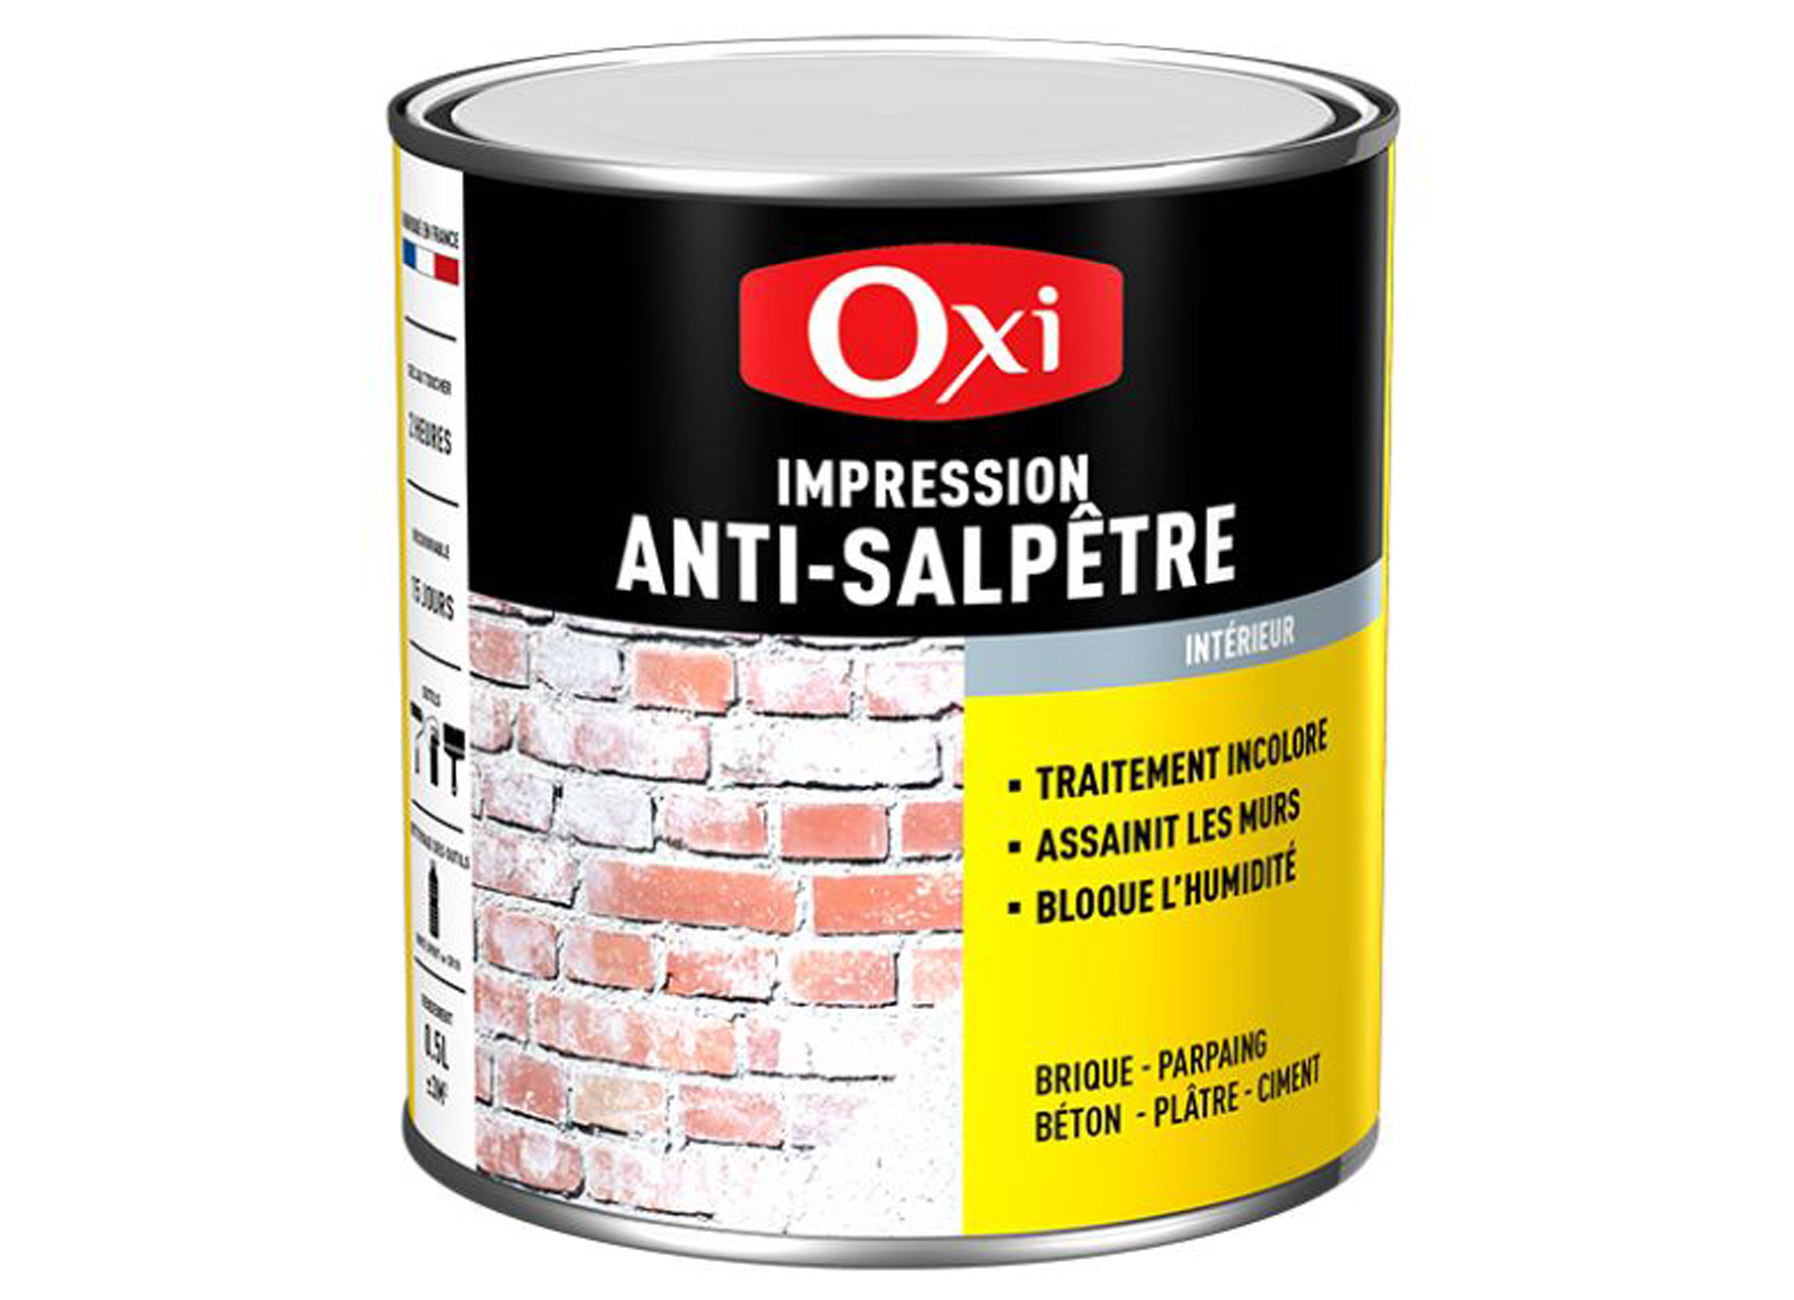 OXI IMPRESSION ANTI-SALPETRE 500ML